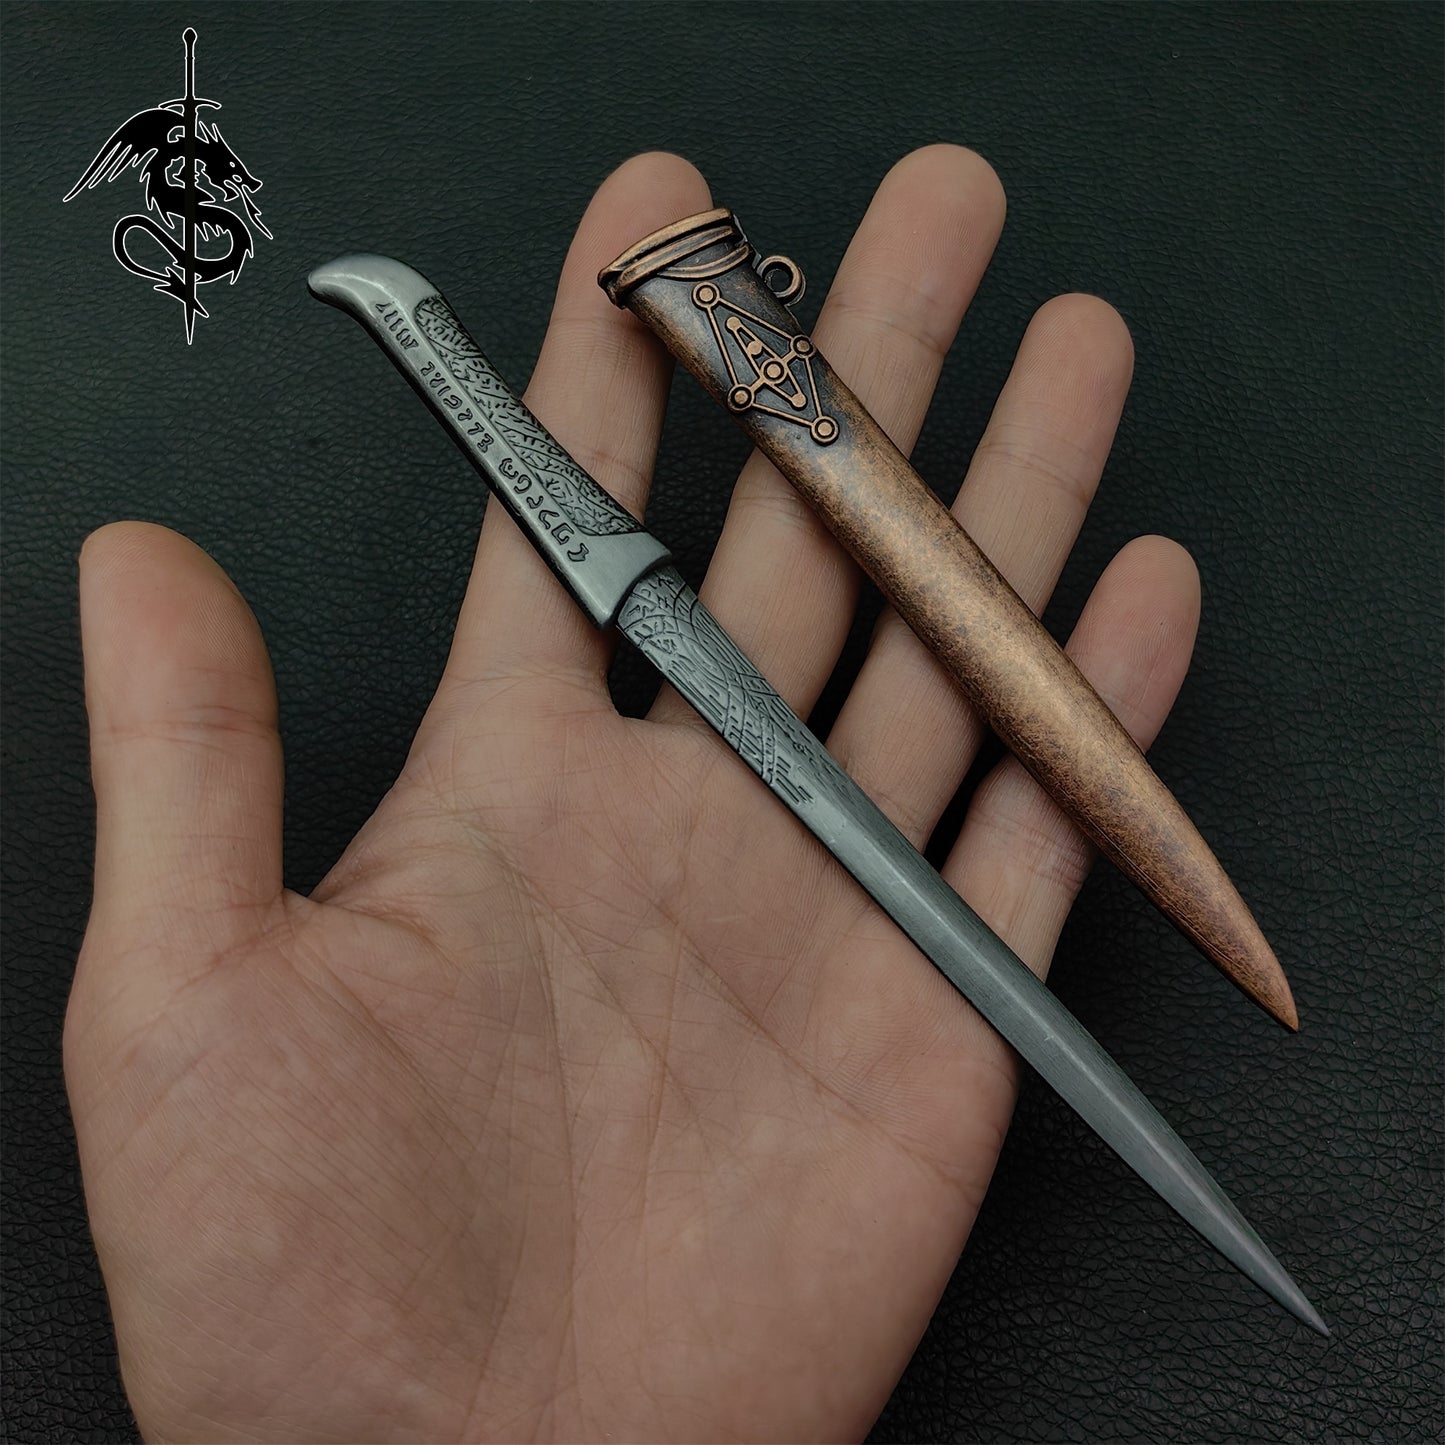 Famous Movie Dune Prop Dib'Muad's Crysknife Replica Tiny Metal Sword